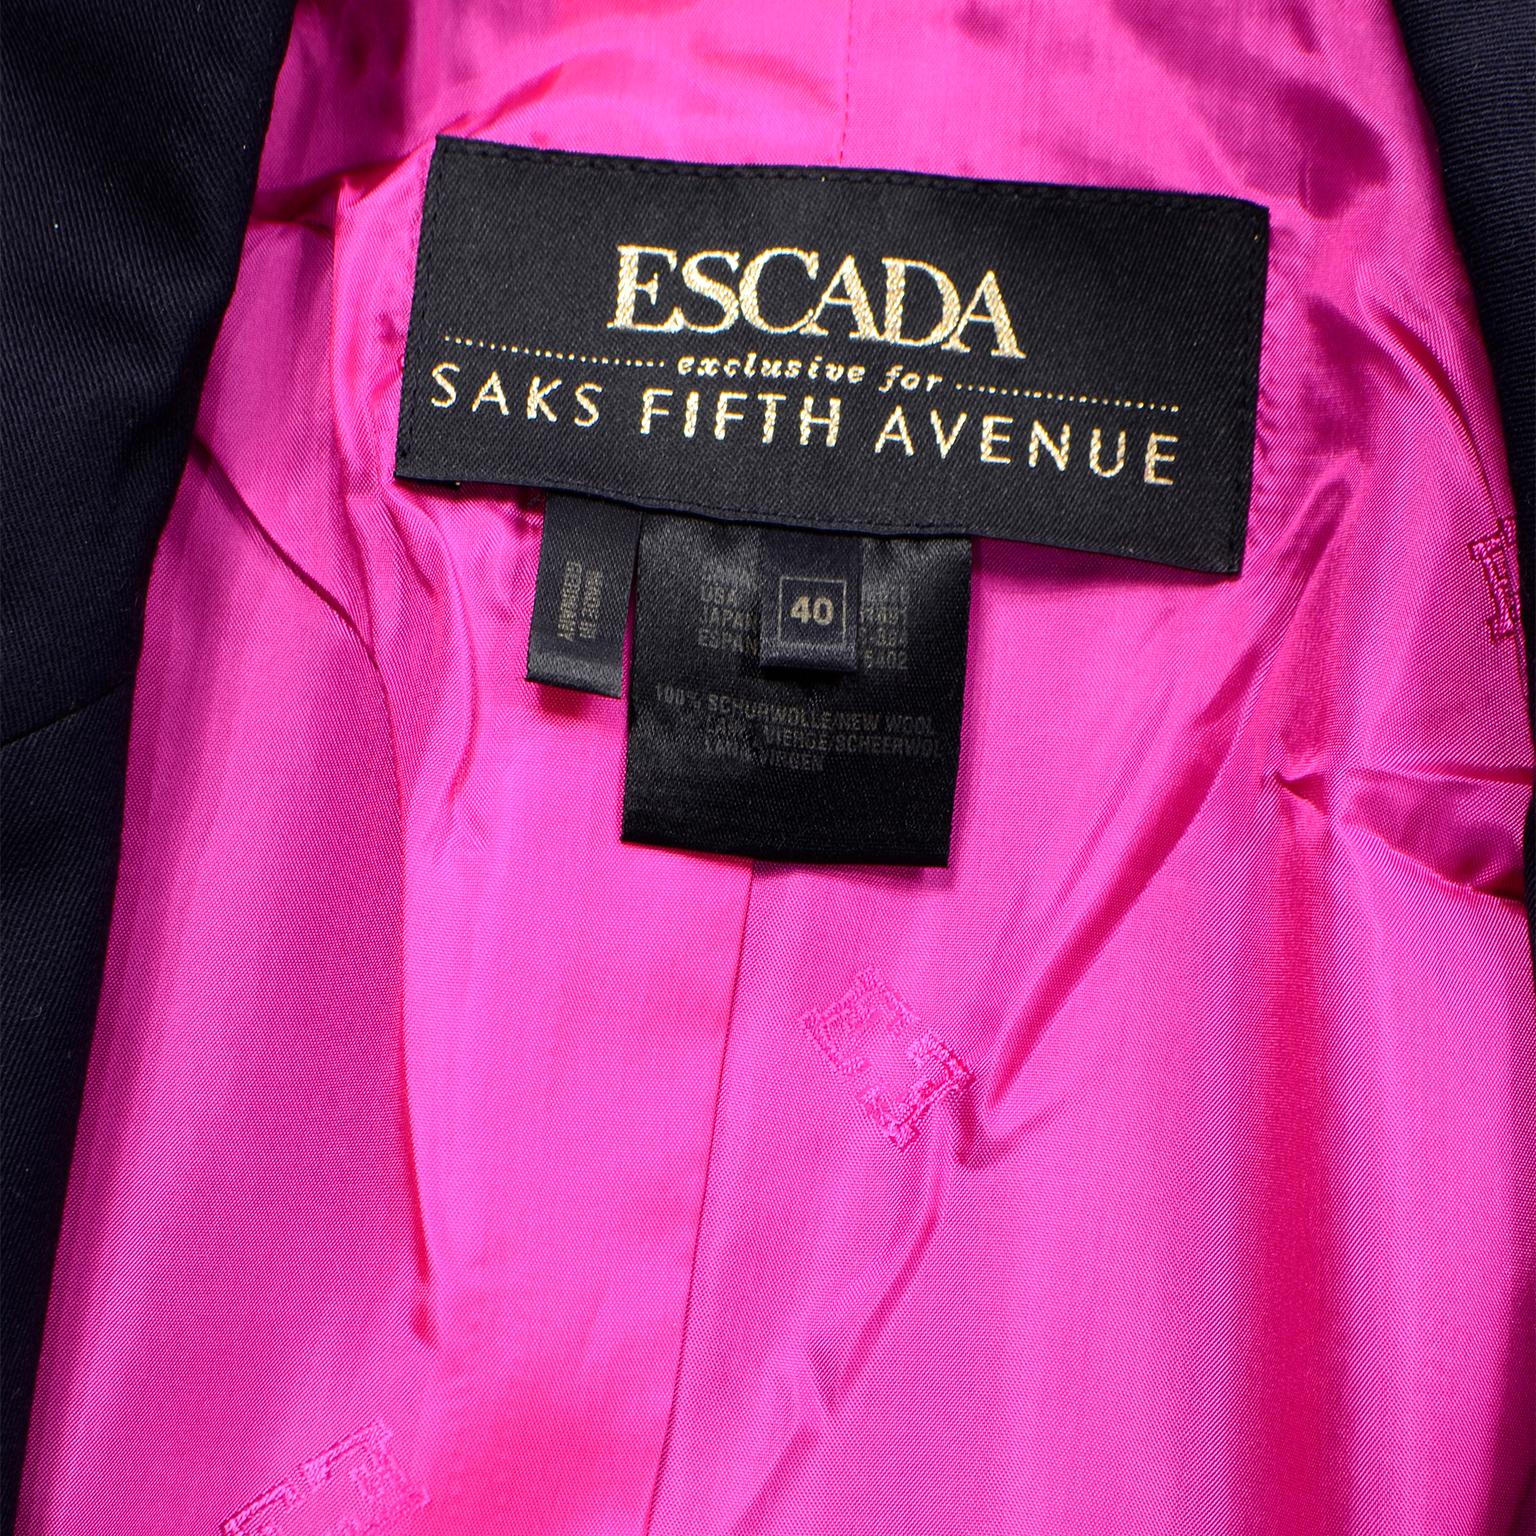 Vintage Escada Saks Fifth Avenue Midnight Navy Blue Blazer Jacket w White Trim For Sale 4